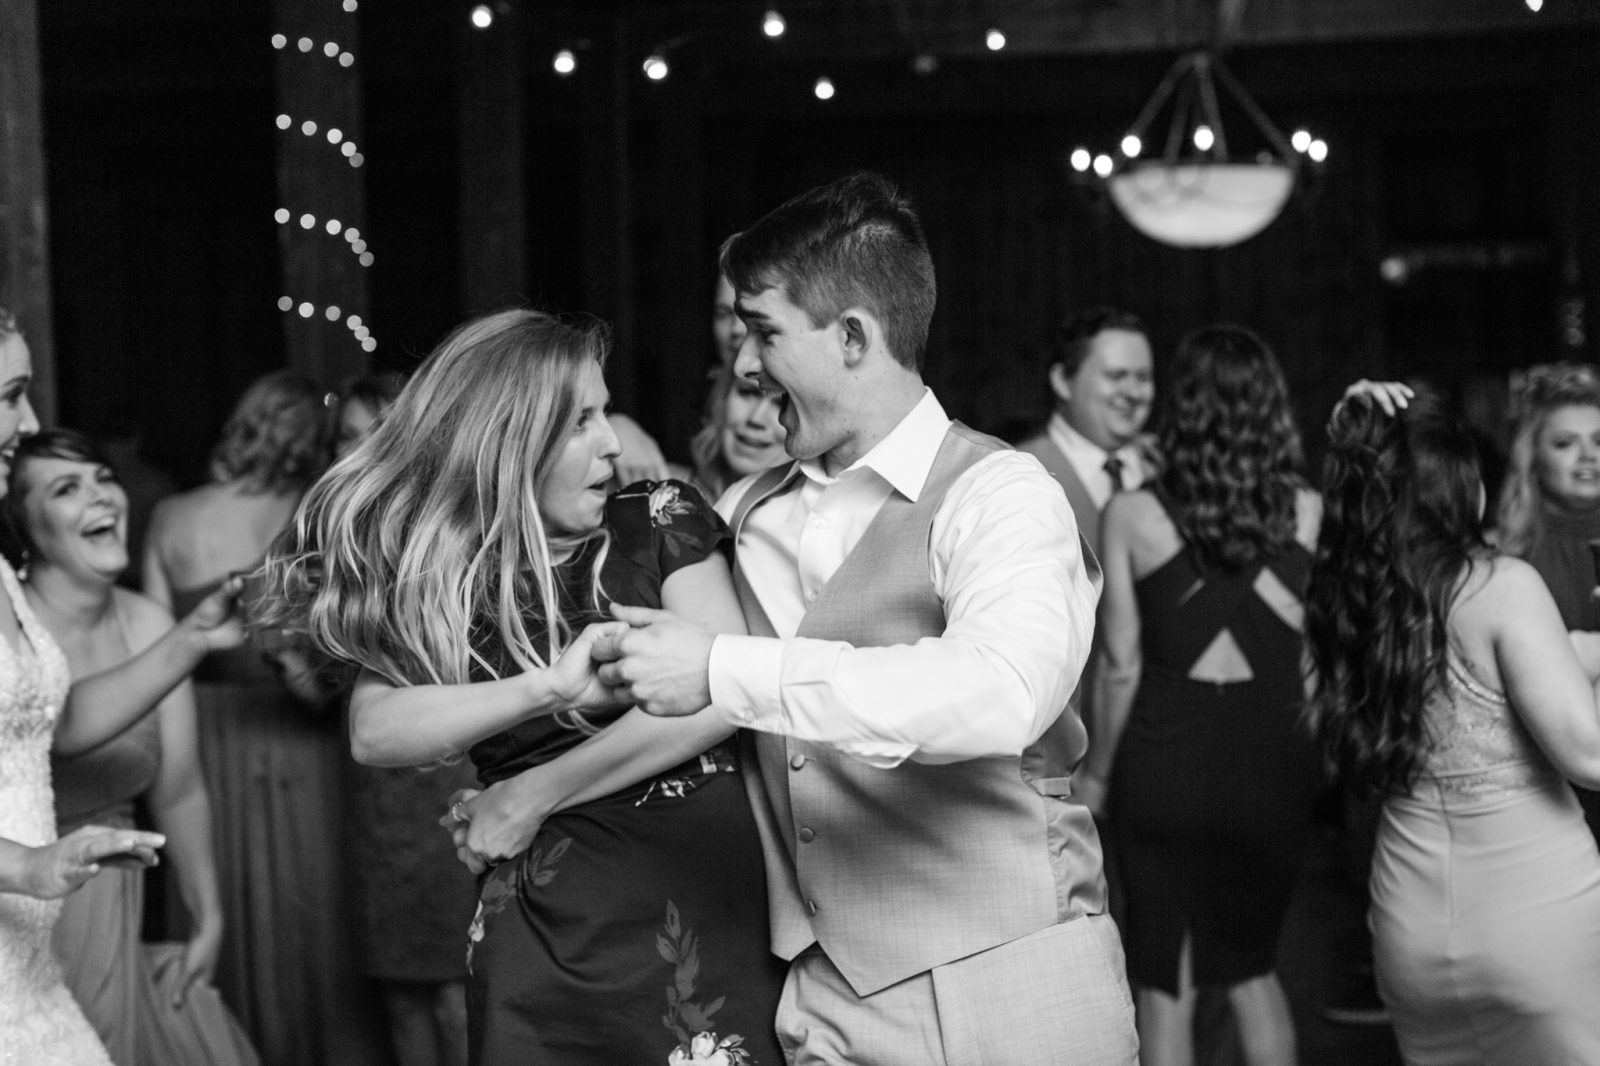 Kirby & Lauren | McKinney Cotton Mill Photography | Dallas DFW Wedding Photographer